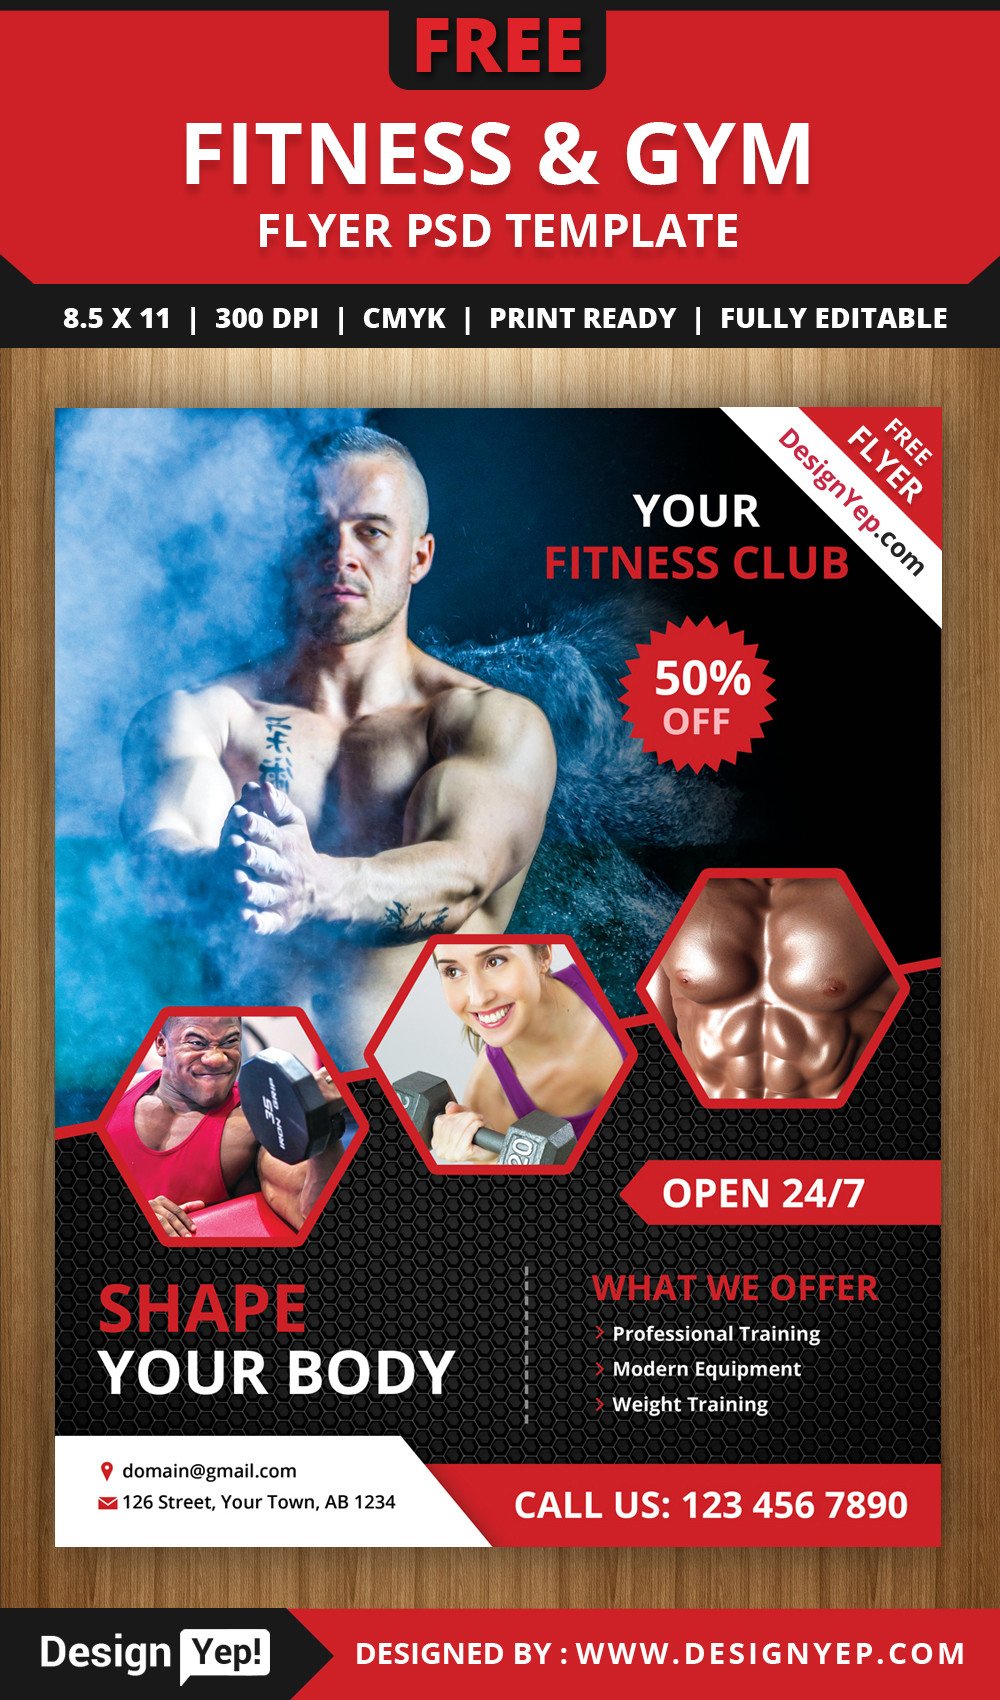 Free Fitness and Gym Flyer PSD Template DesignYep